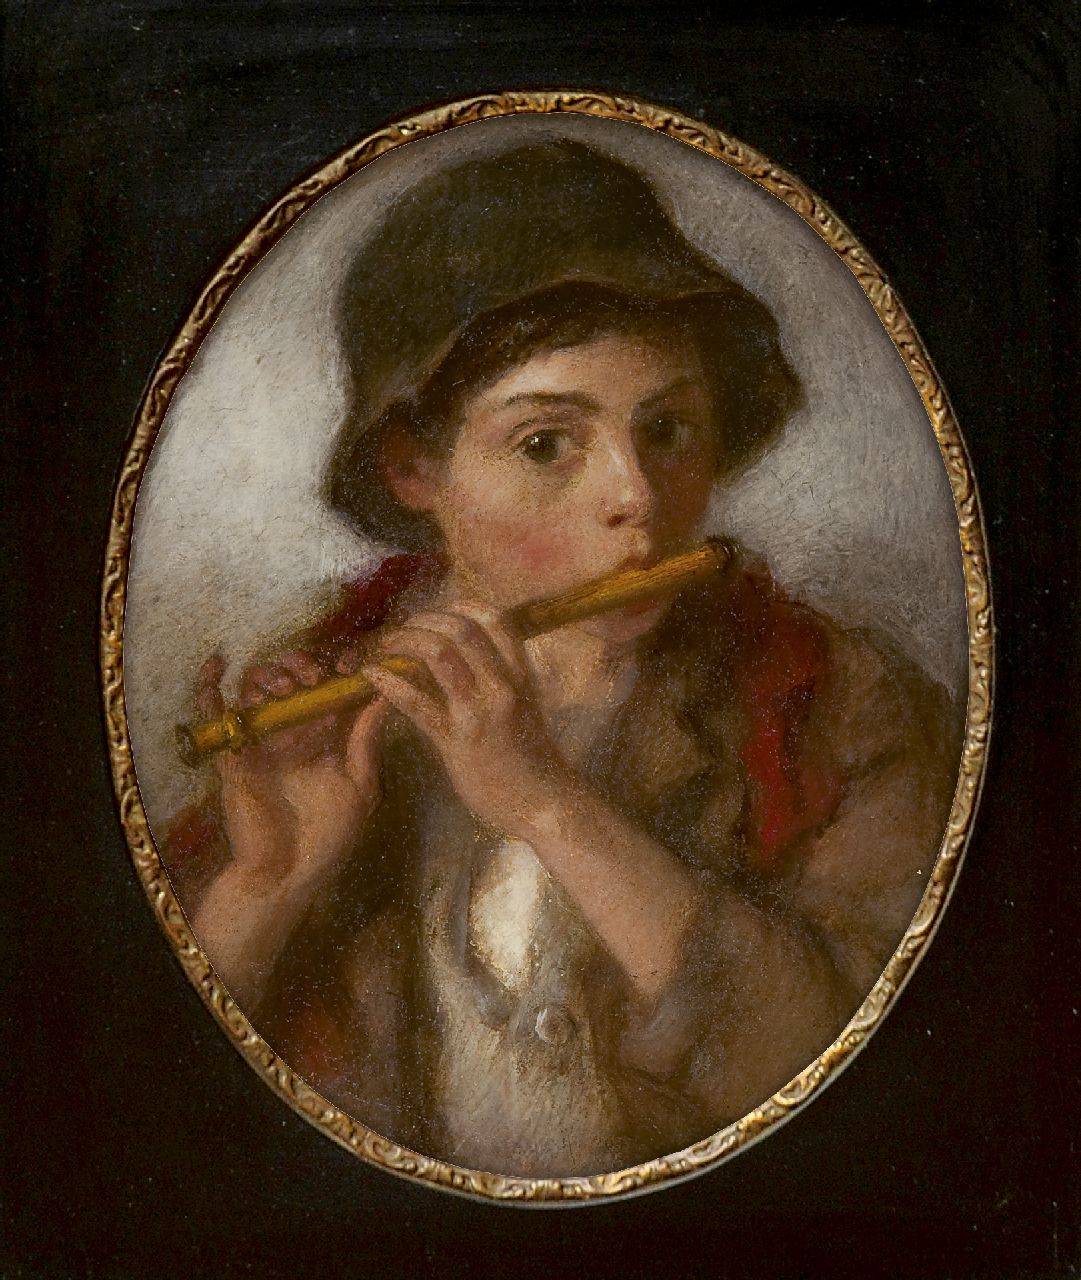 Broedelet A.V.L.  | 'André' Victor Leonard Broedelet, A young shepherd with flute, Öl auf Eternit 23,0 x 18,0 cm, signed l.r. with monogram